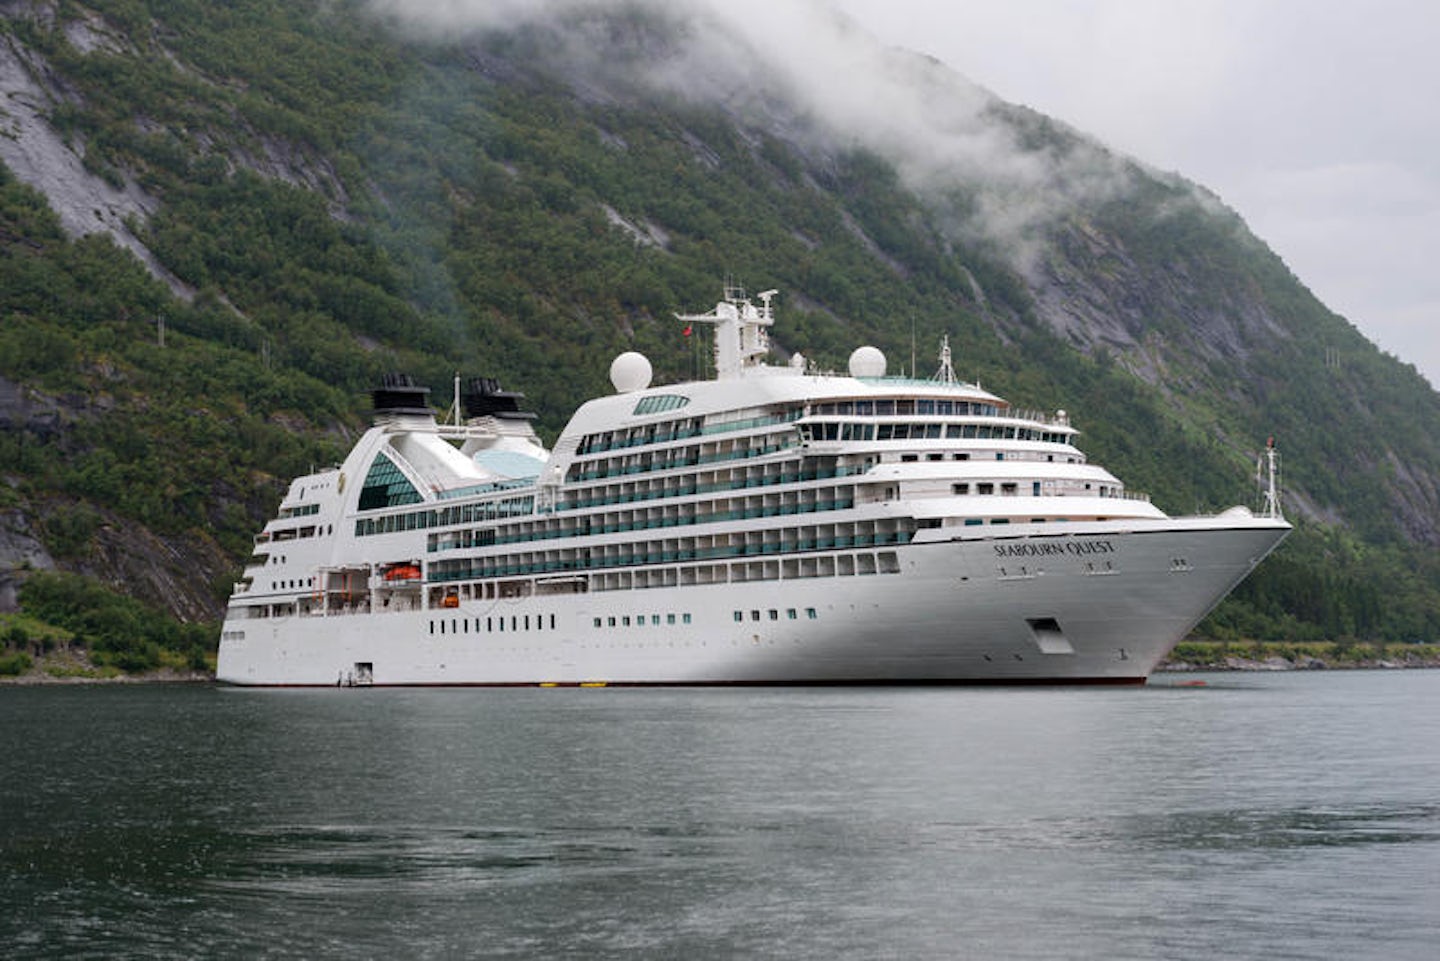 cruise ship seabourn quest